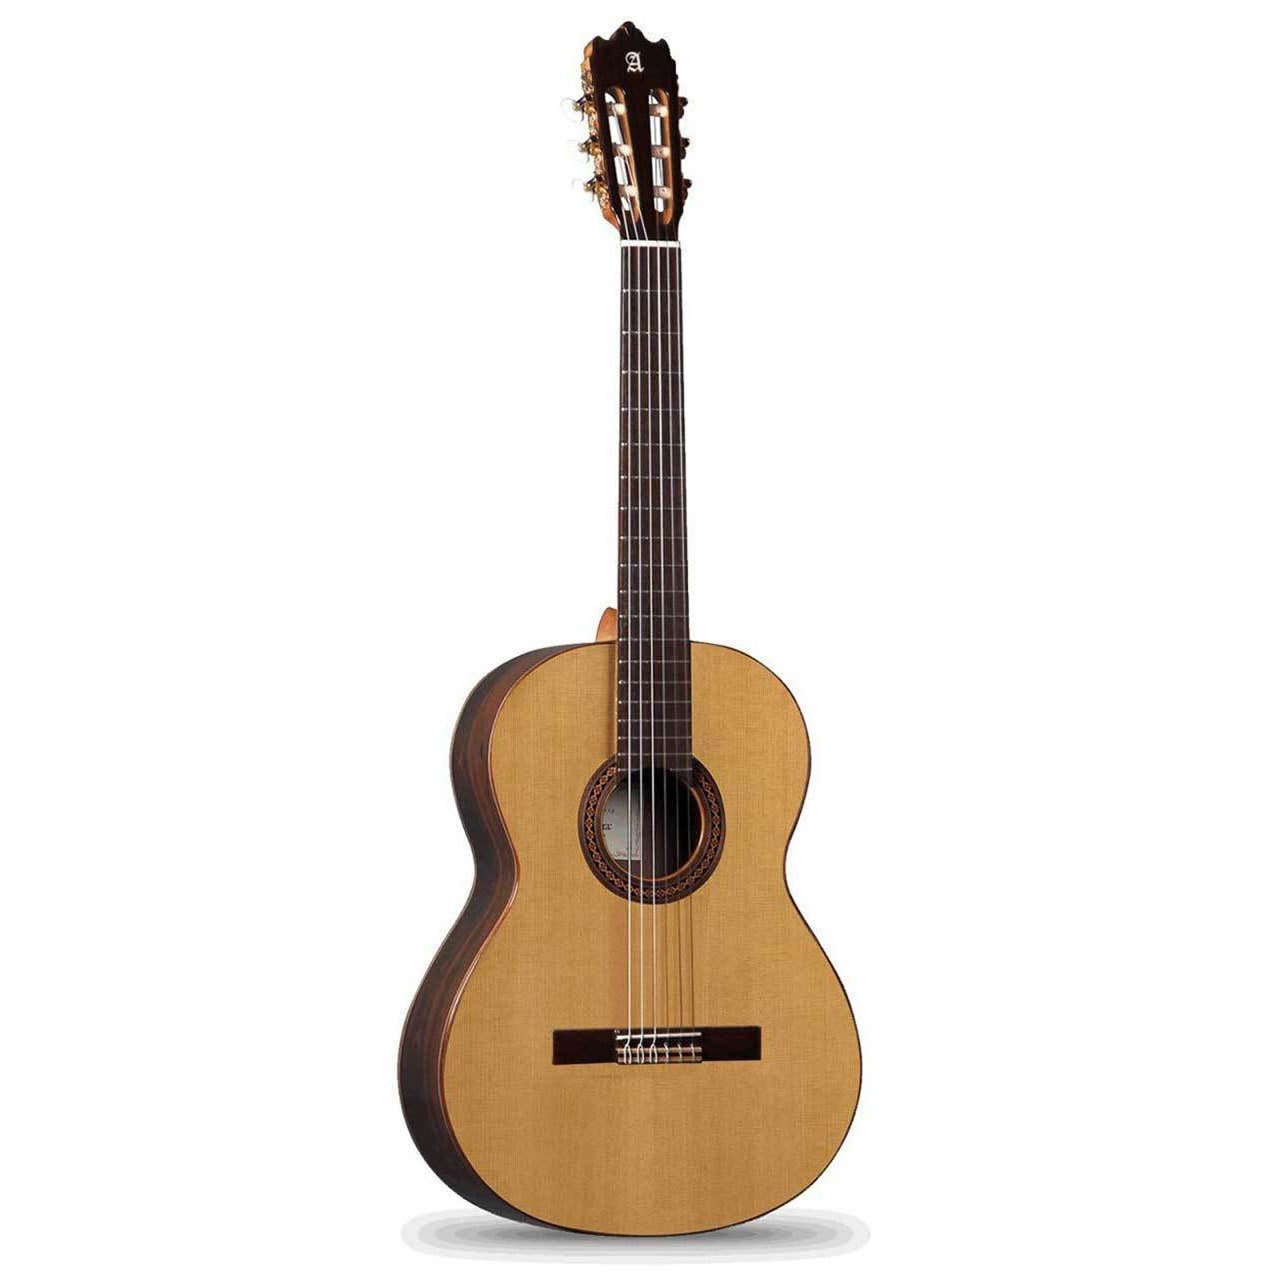 Alhambra İberia Ziricote Klasik Gitar